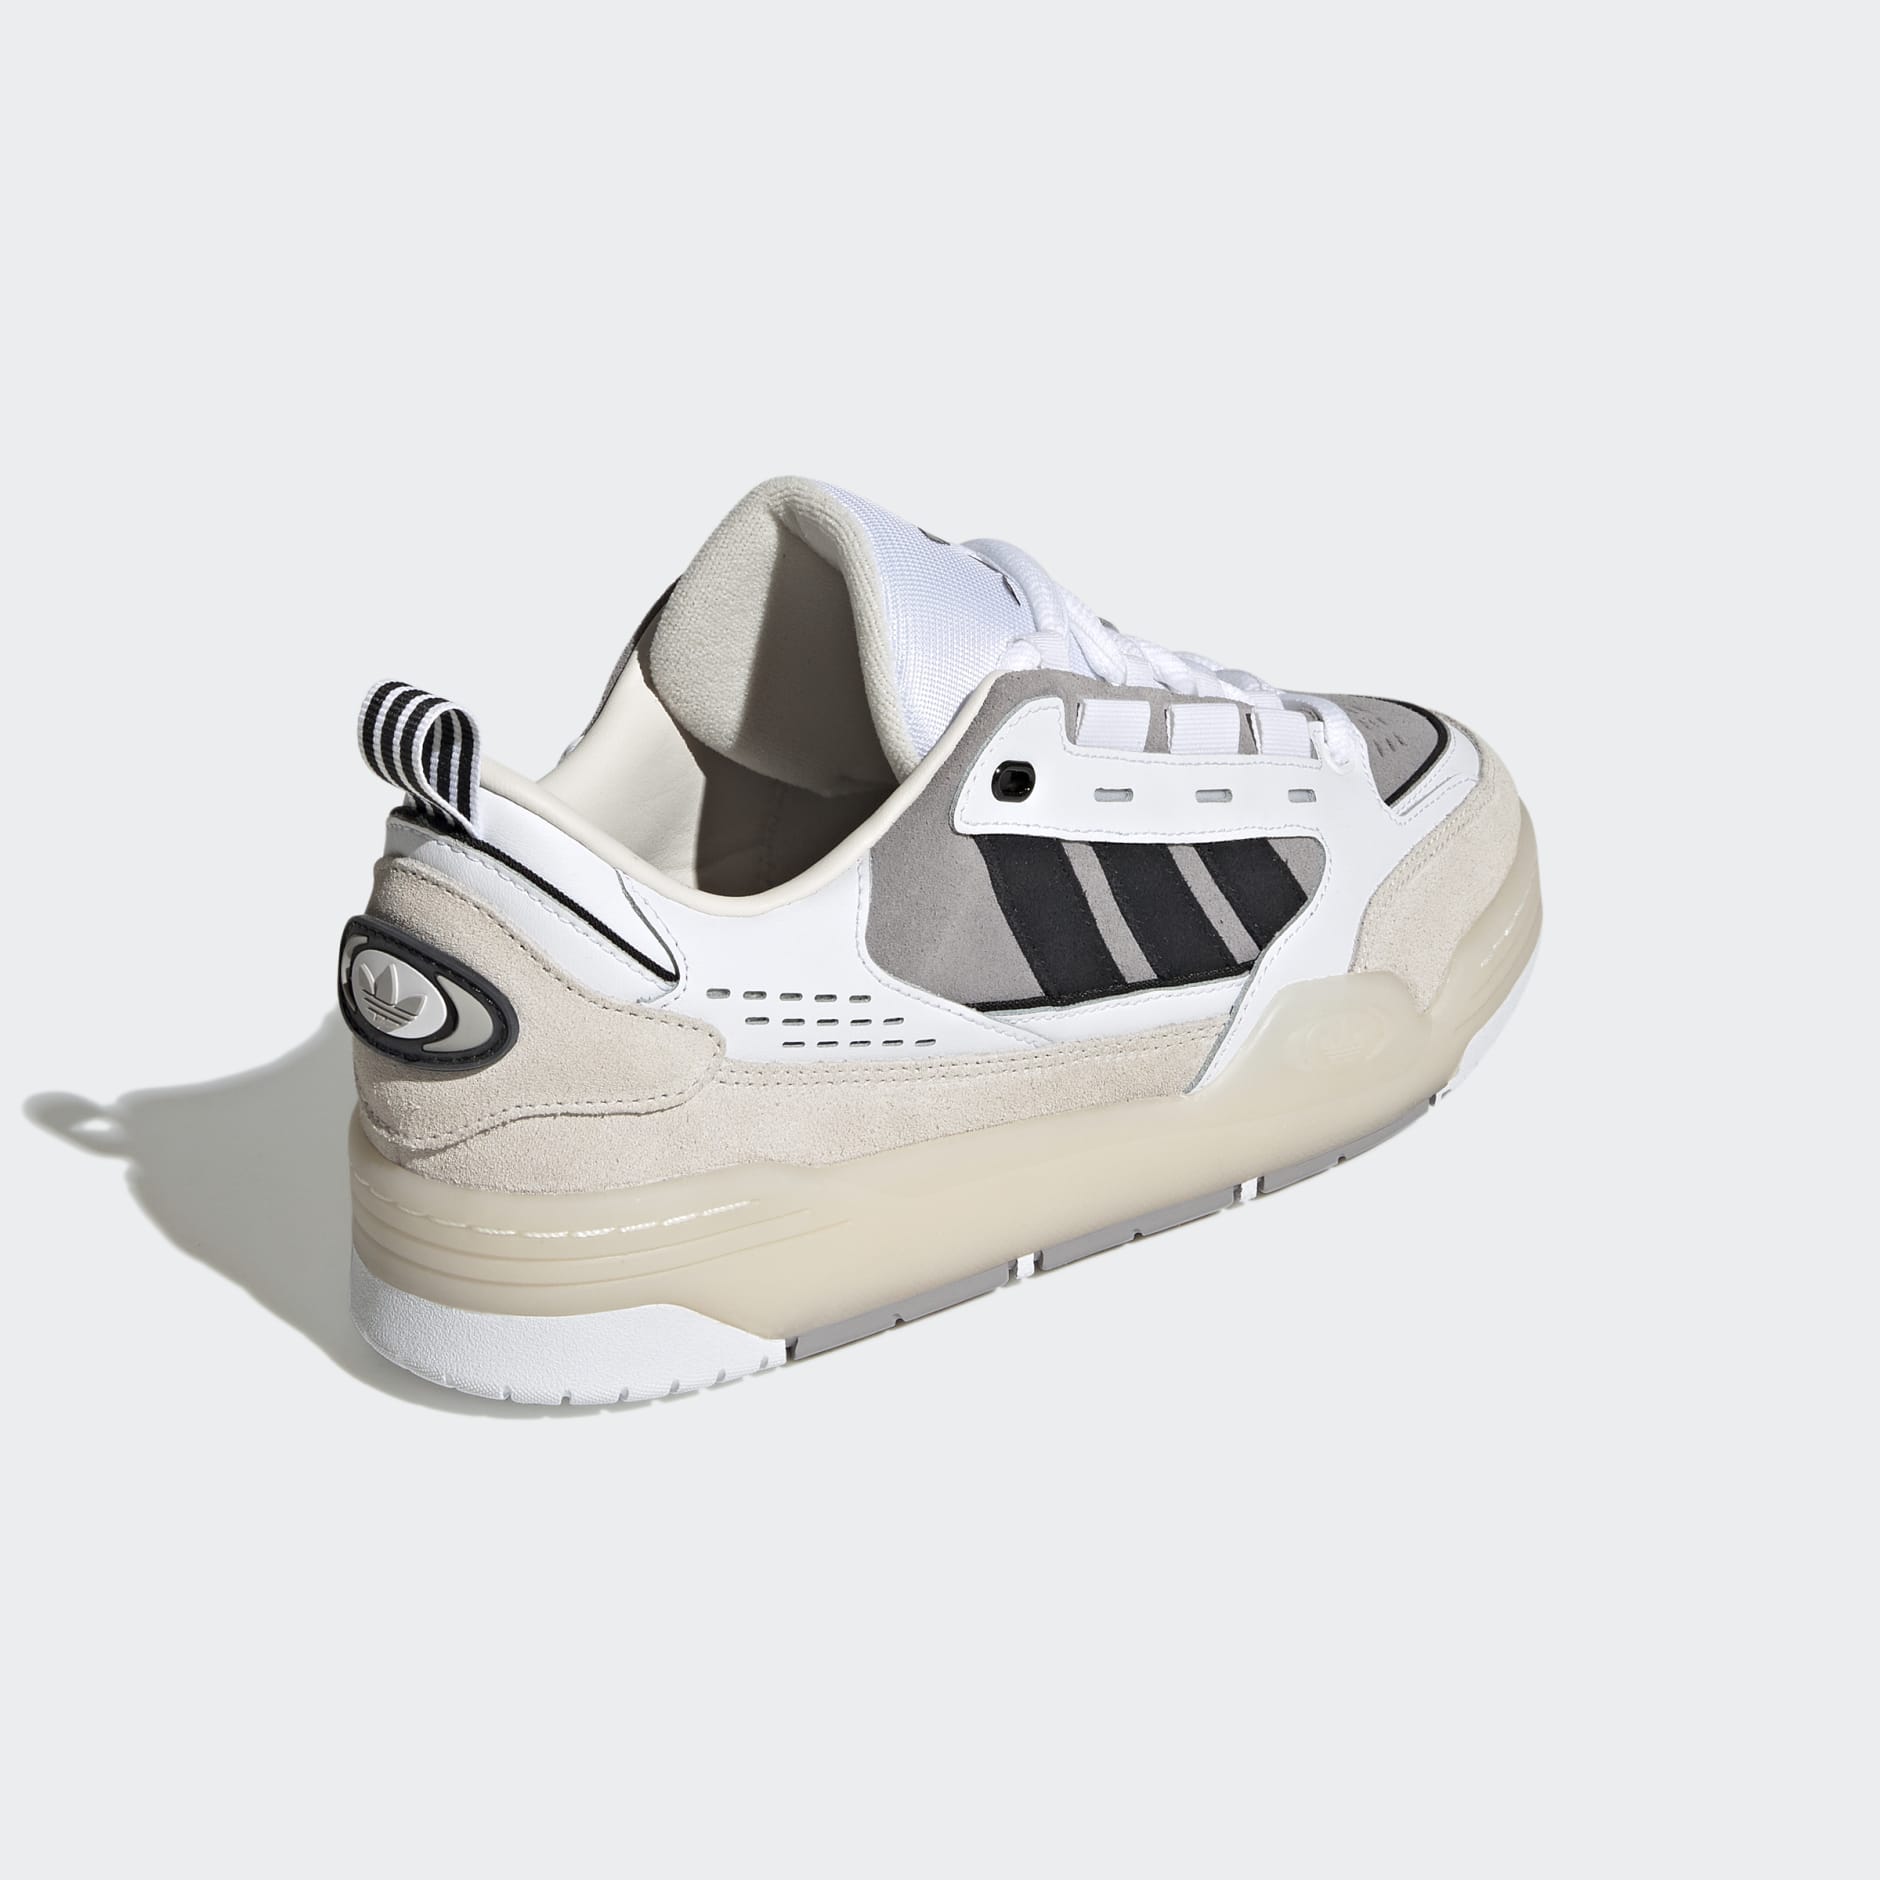 White adi2000 - Shoes adidas | TZ adidas